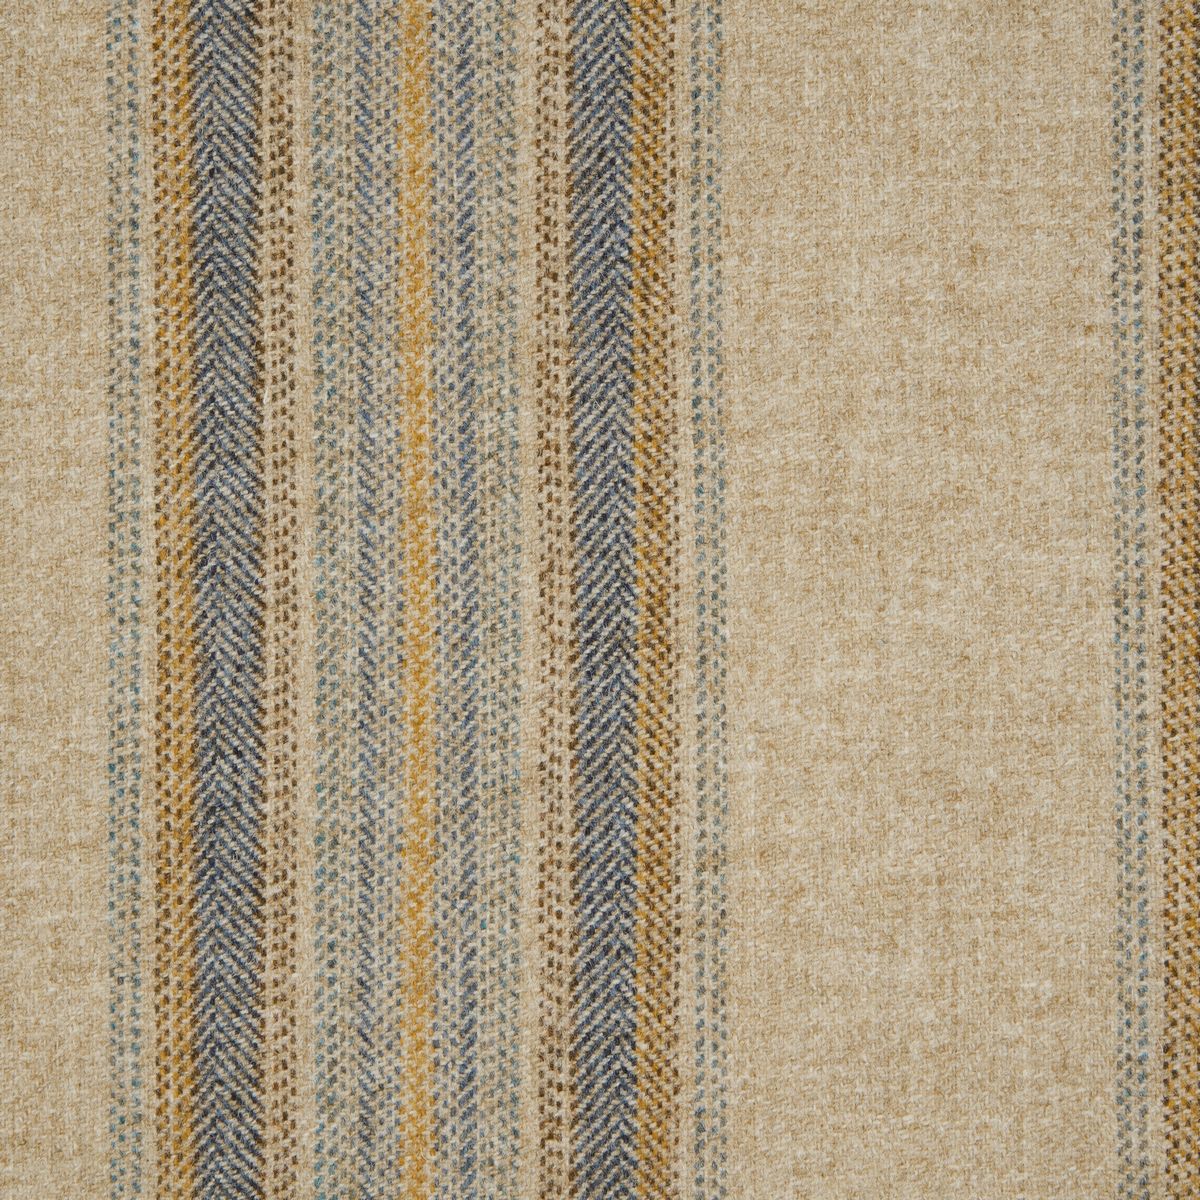 Wentworth Stripe Natural Denim Fabric by Abraham Moon